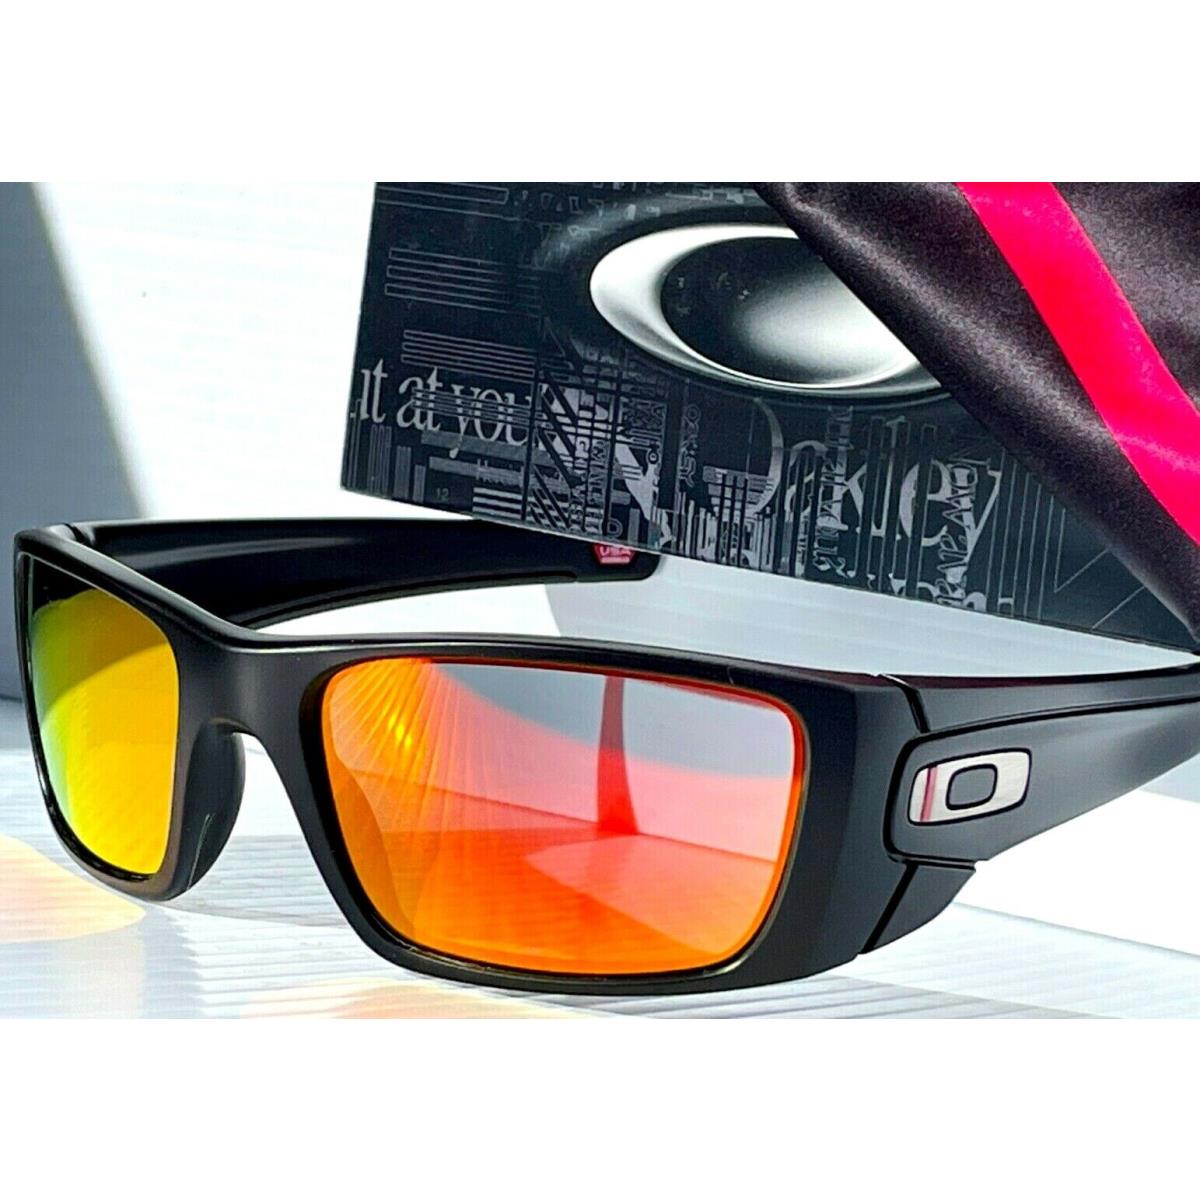 Oakley sunglasses Fuel Cell - Black Frame, Red Lens 2